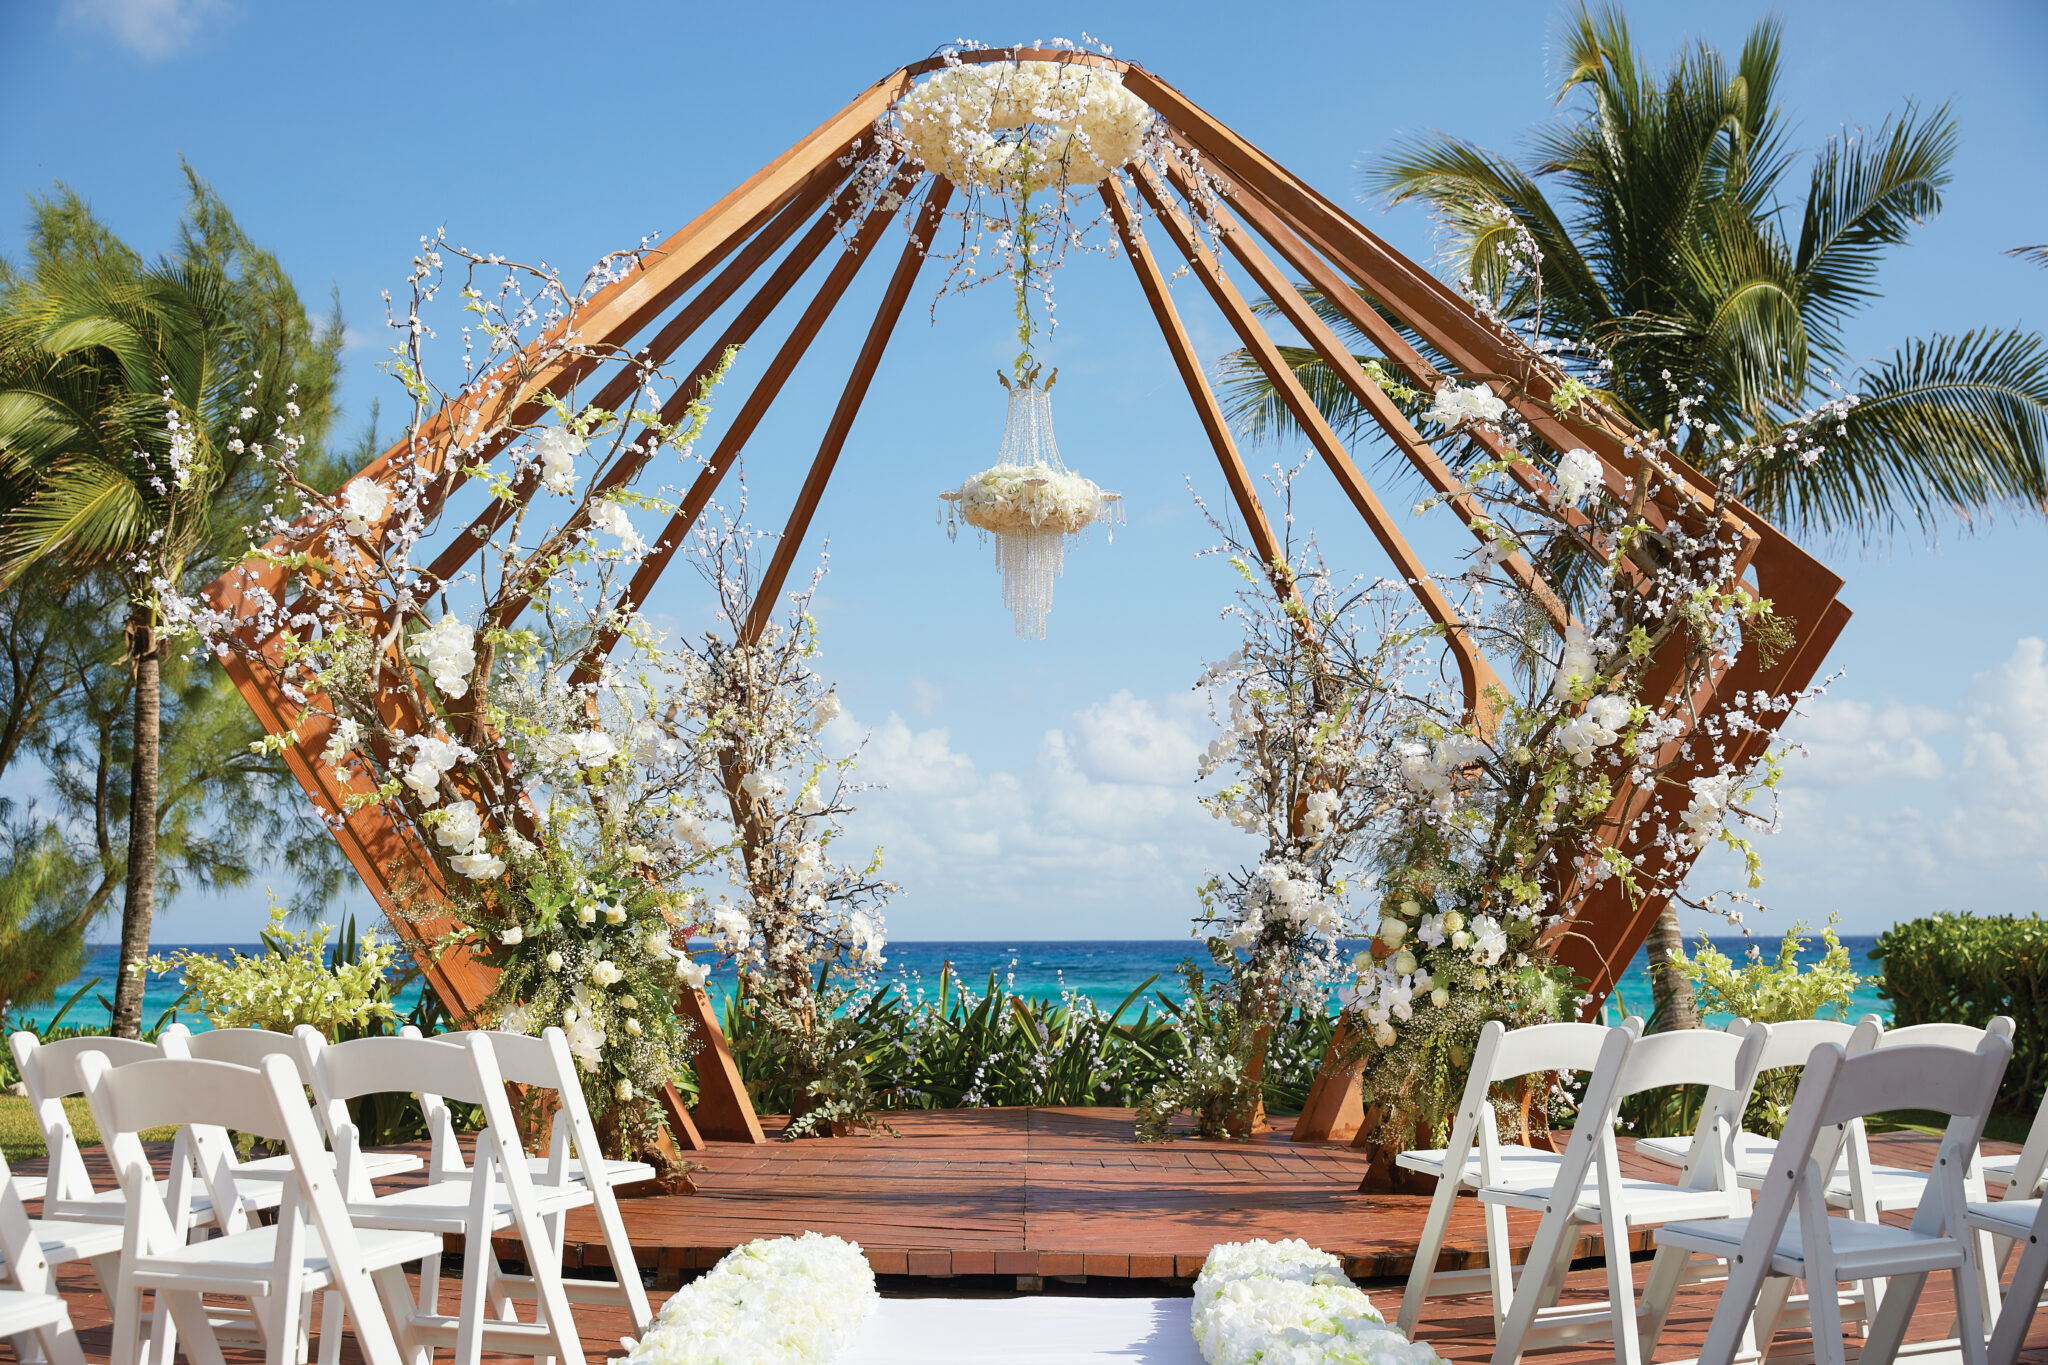 oceanfront wedding gazebo with flowers